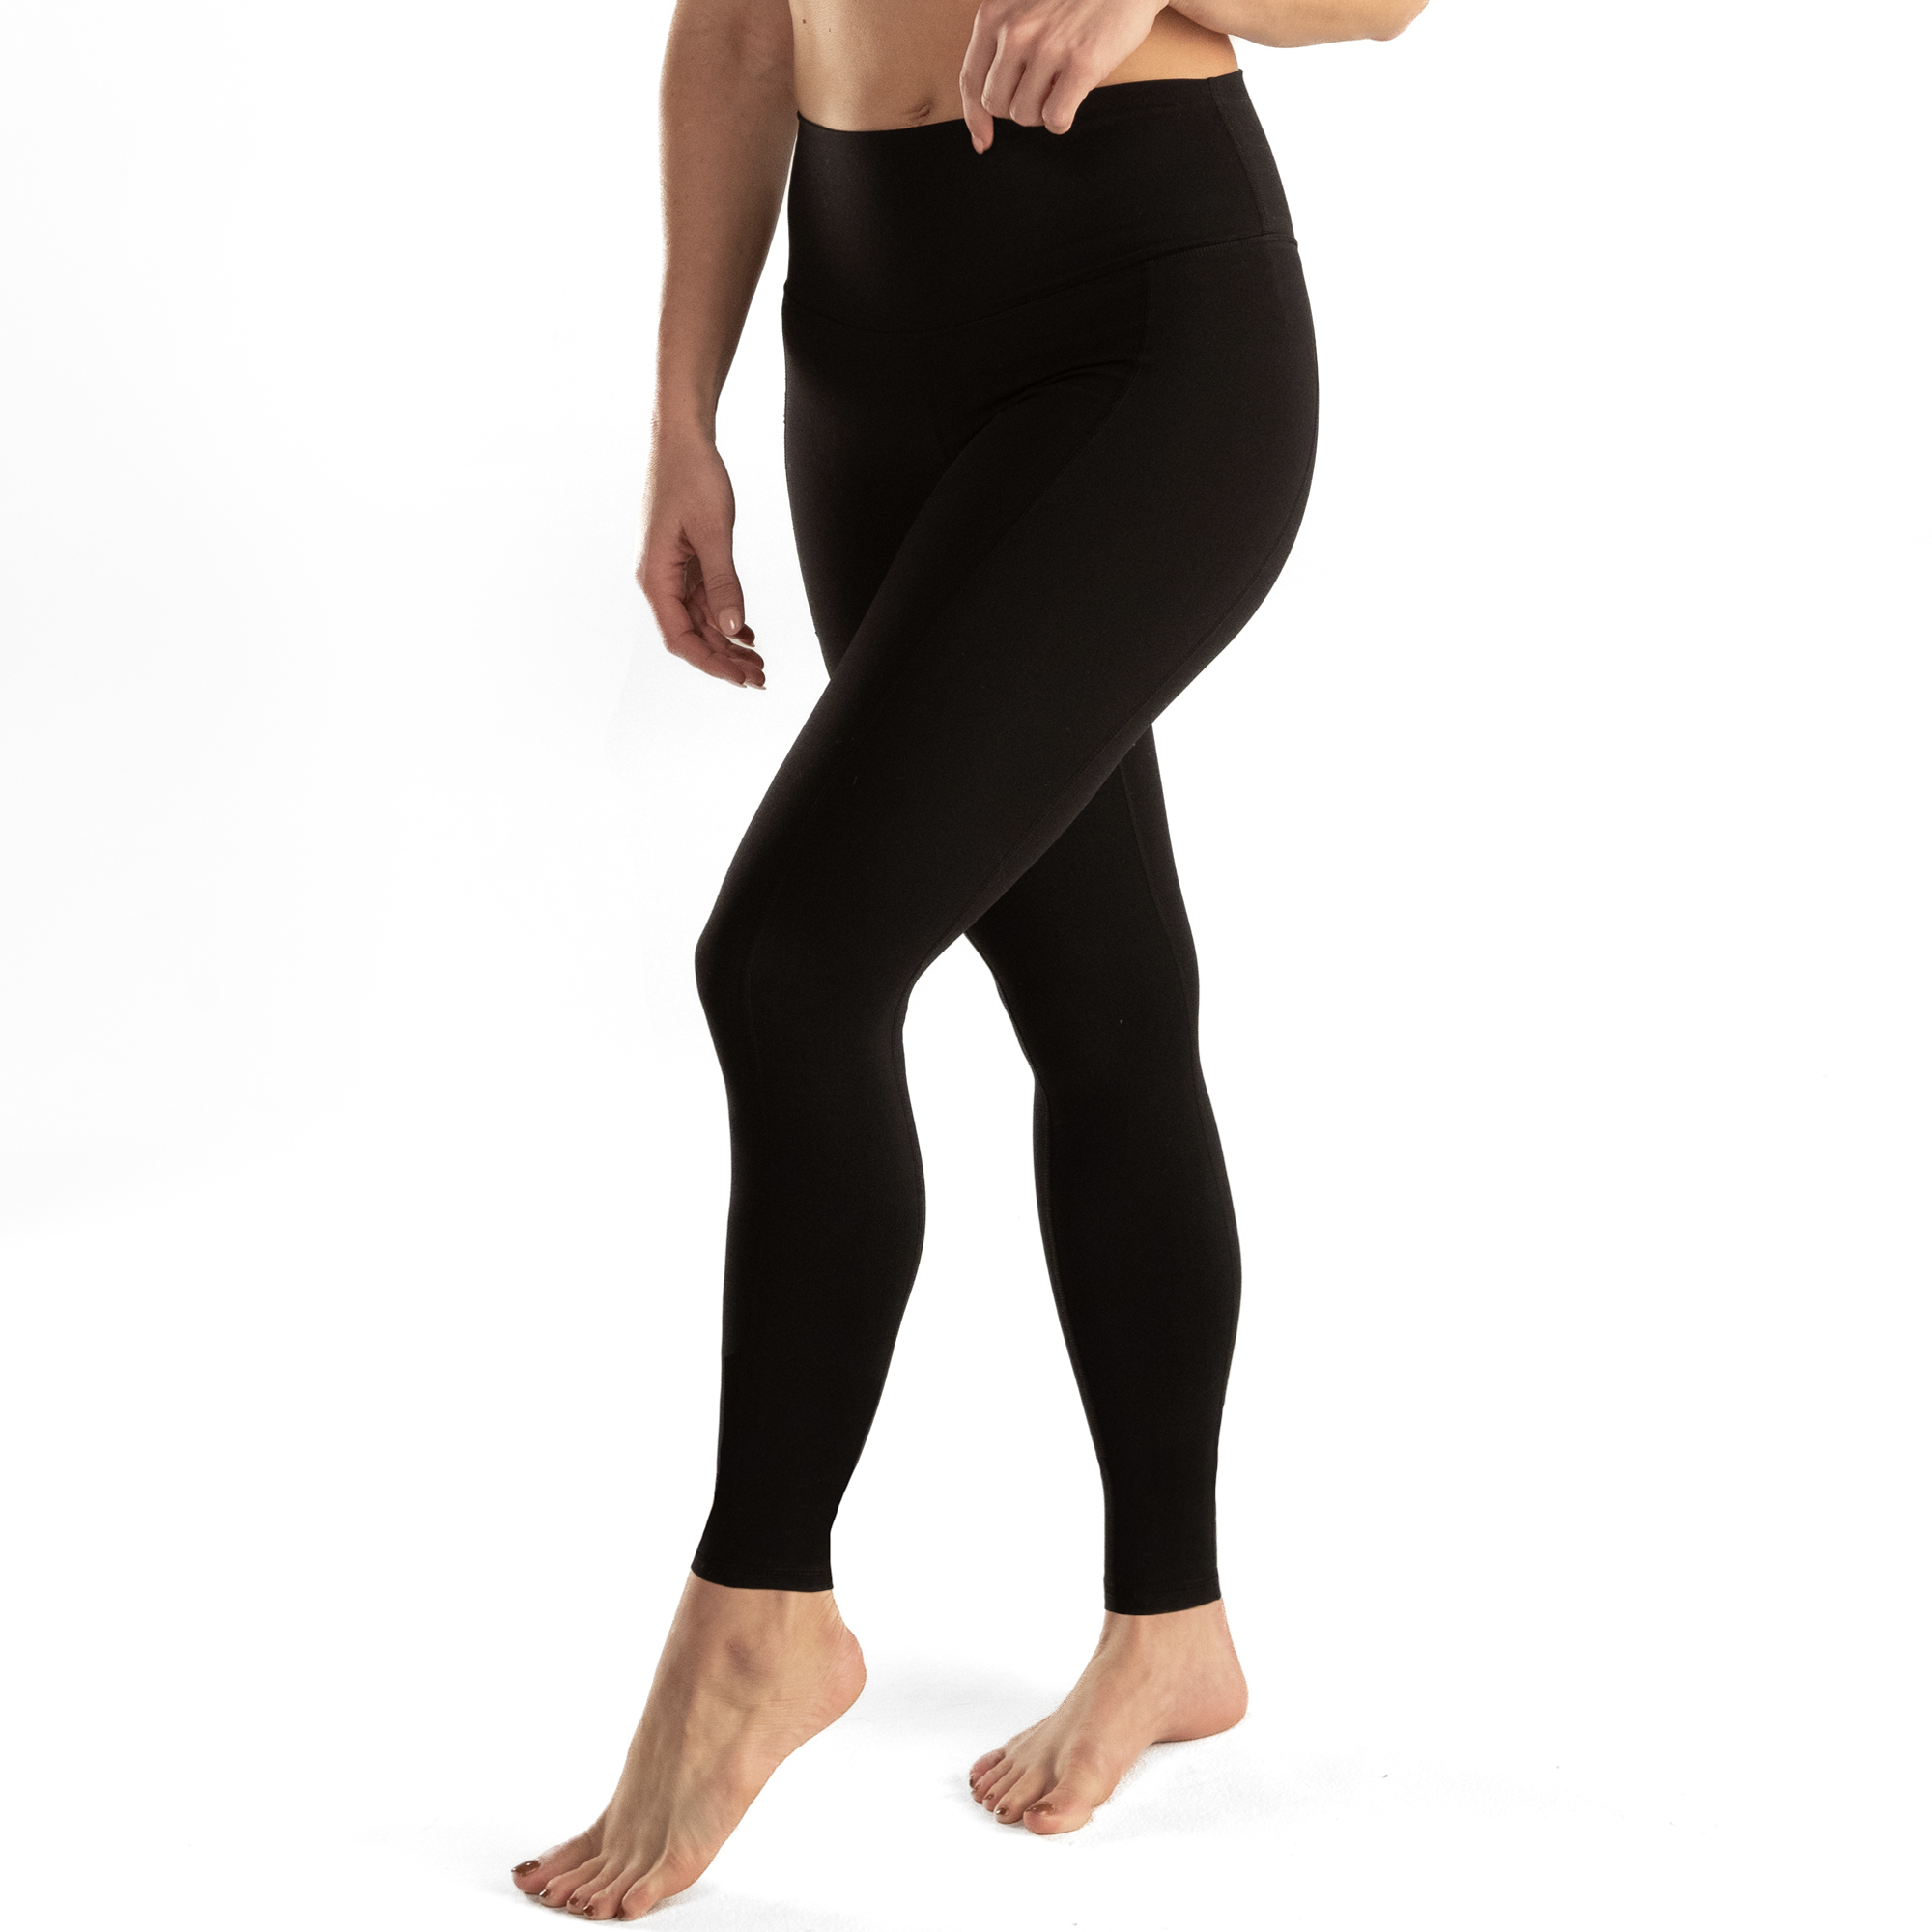 Lumana Leakproof Yoga Pant Leggings, 22 Inseam, Plum, 3X, Single